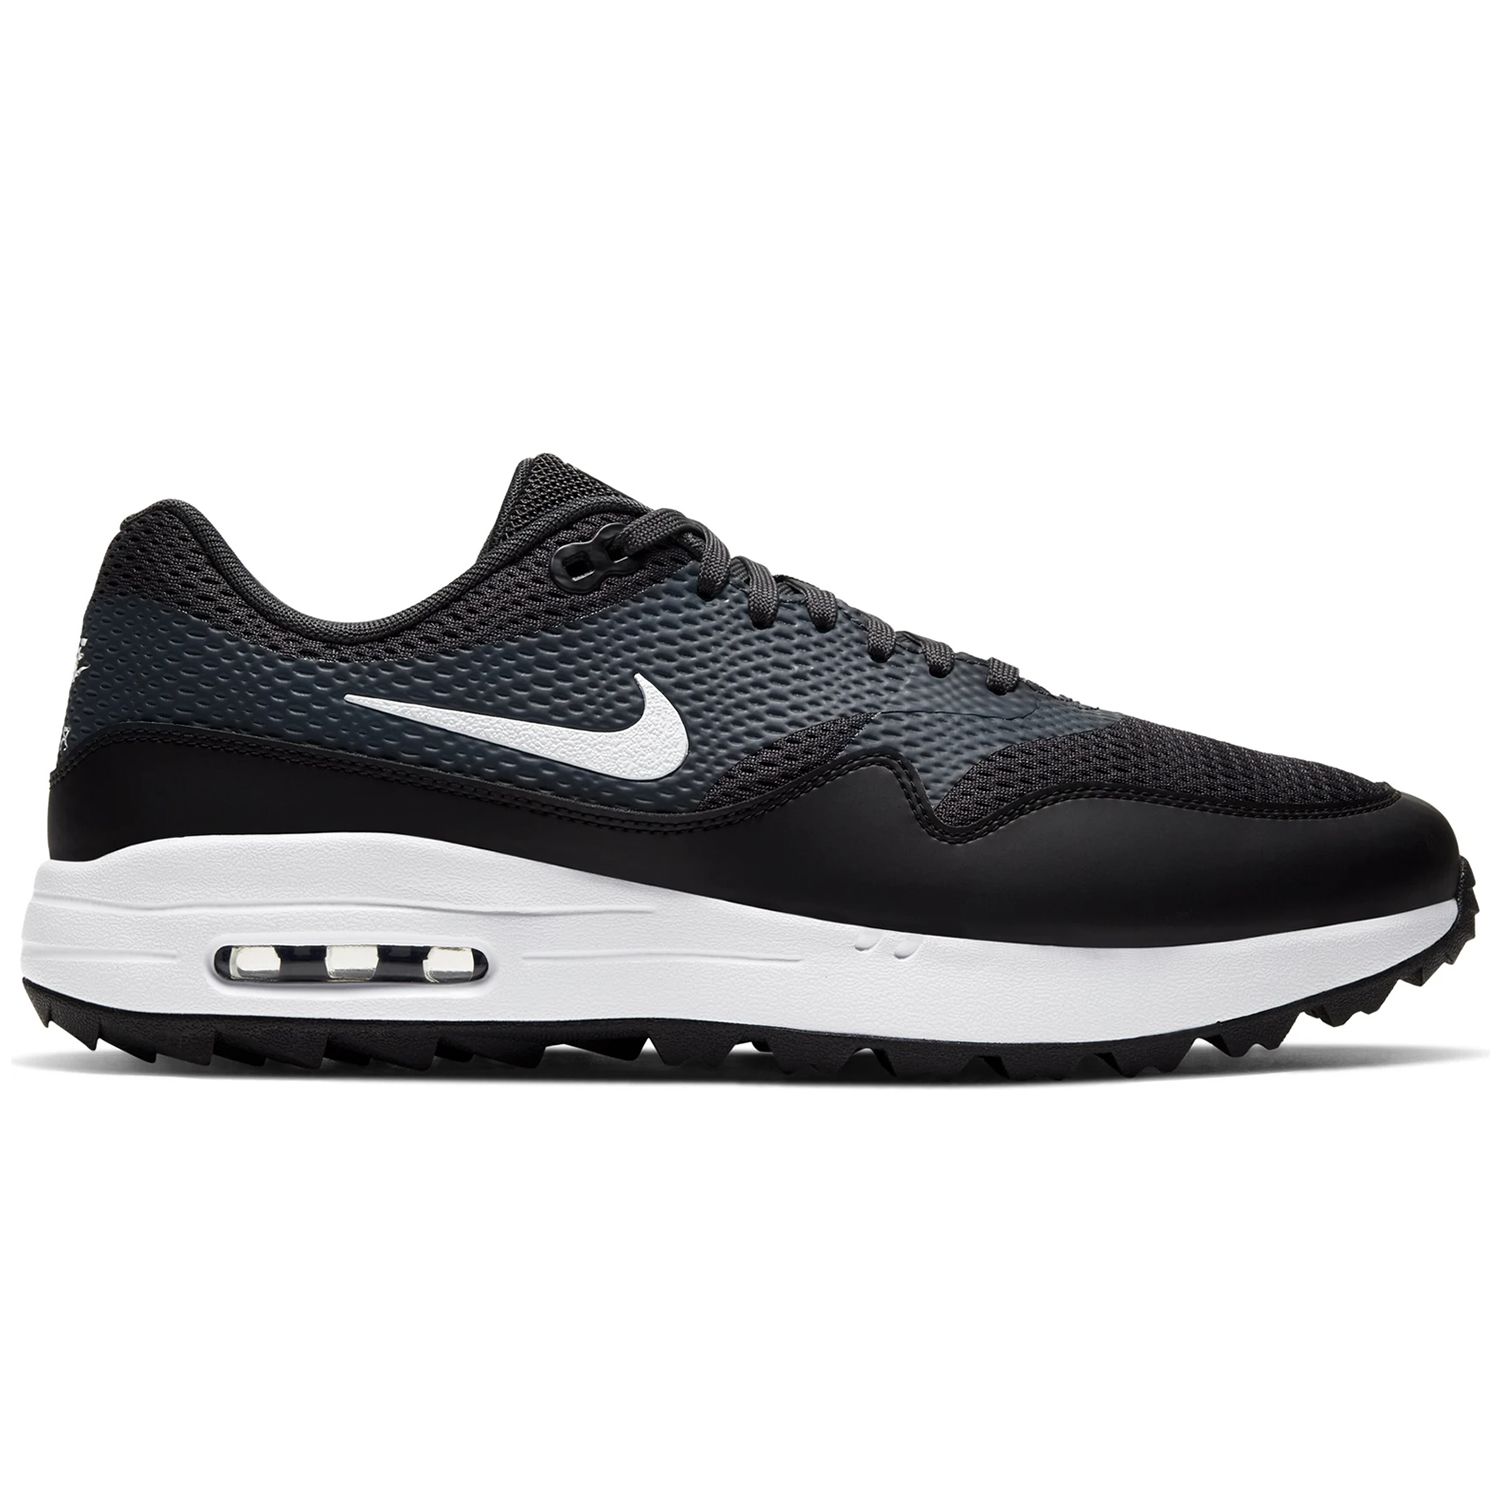 Nike Air Max 1 G Golf Shoes Black/Anthracite/White | Scottsdale Golf